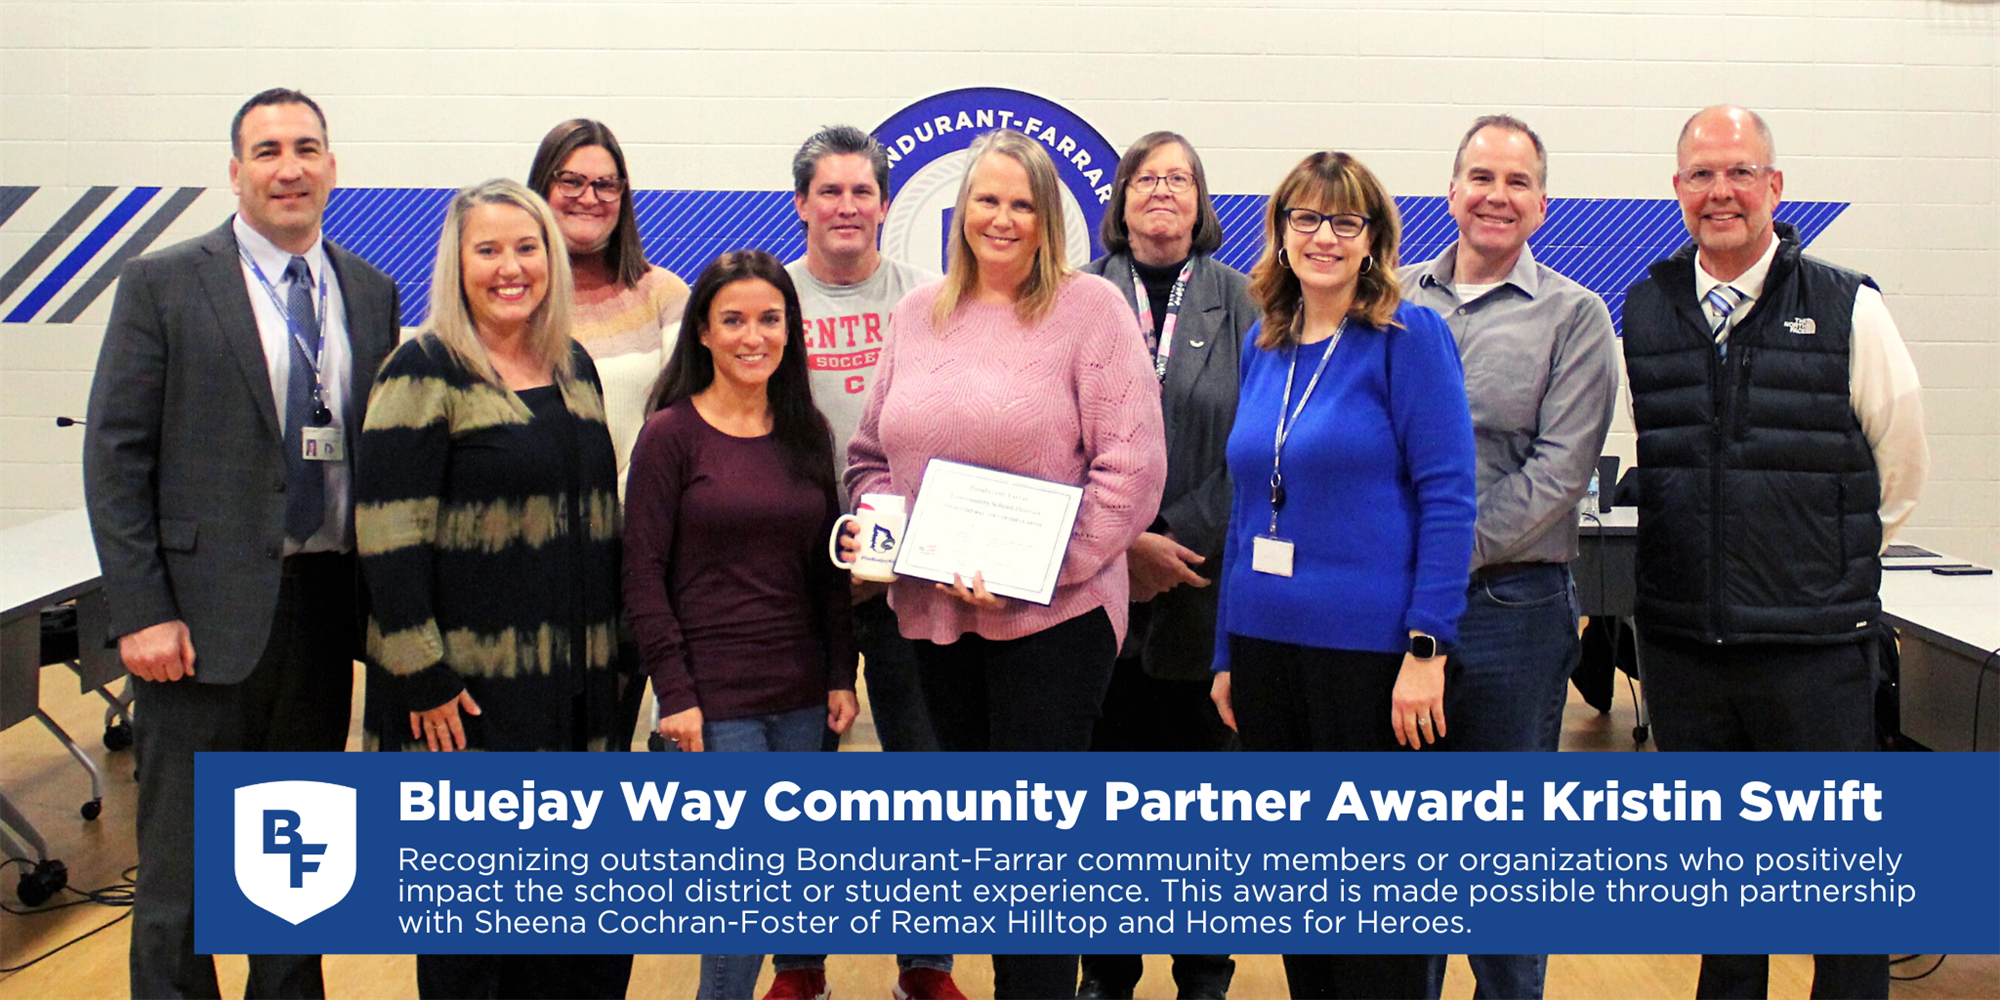 Bluejay Way Community Partner Award: Kristin Swift